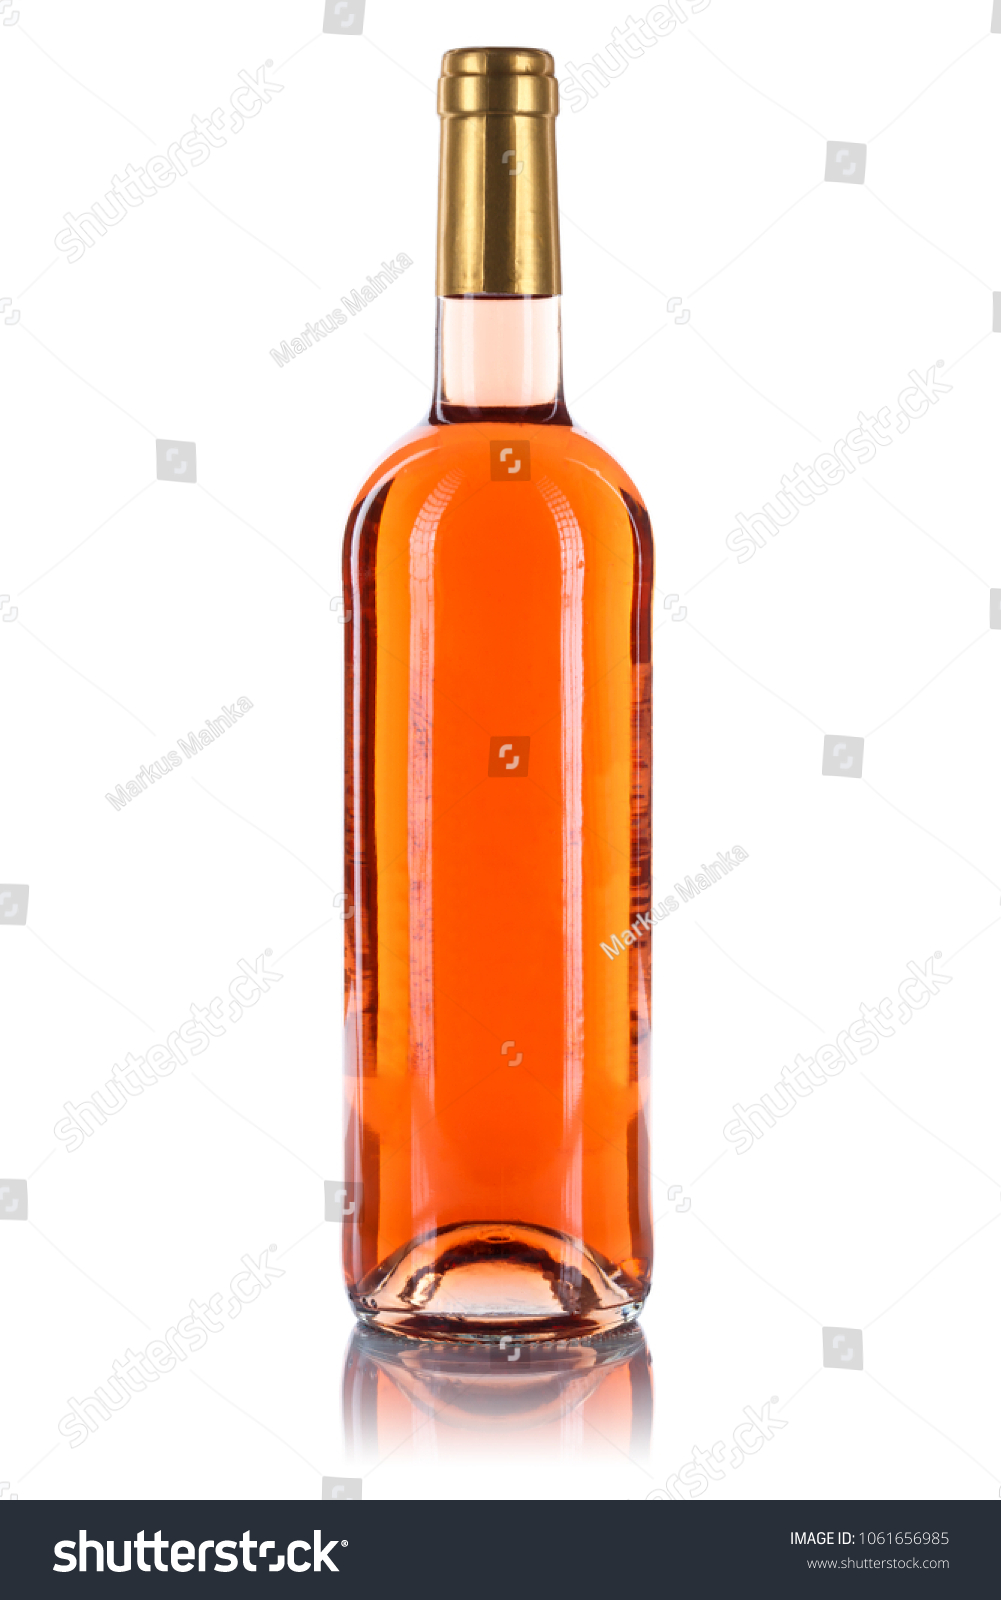 Rose wine bottle isolated on a white background #1061656985